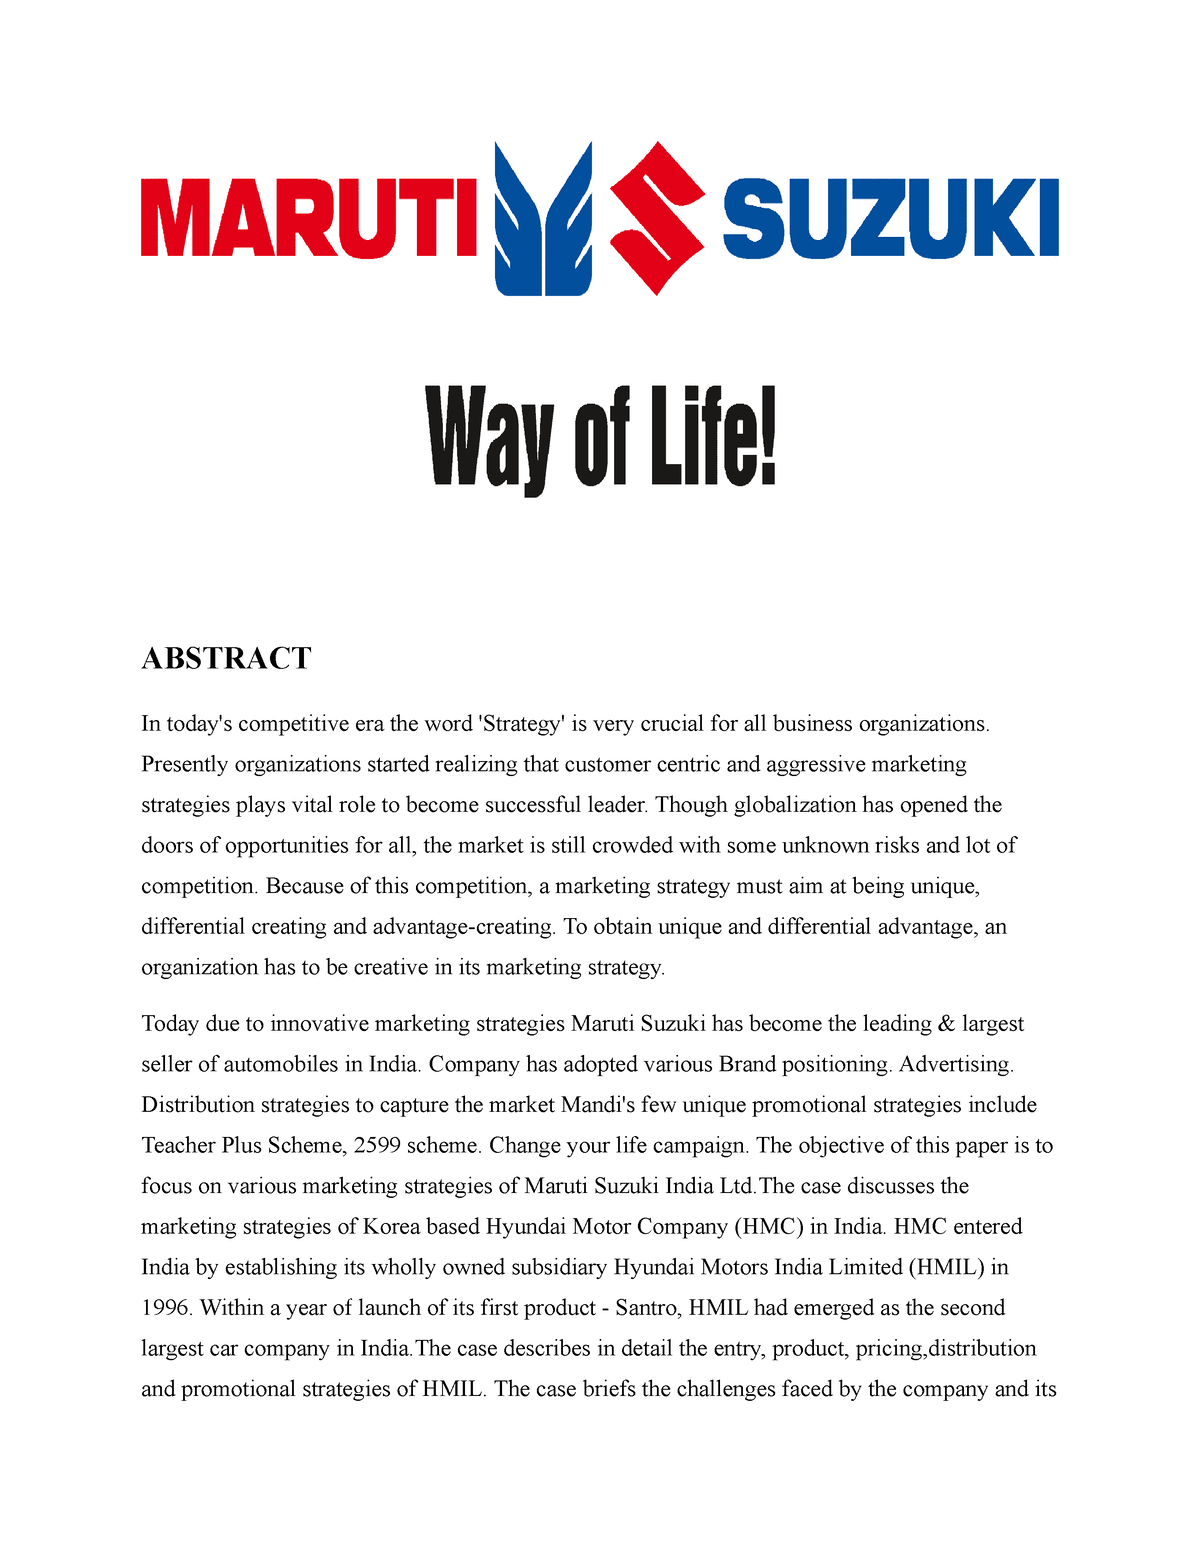 History & Marketing Strategies of Maruti Suzuki Alto 